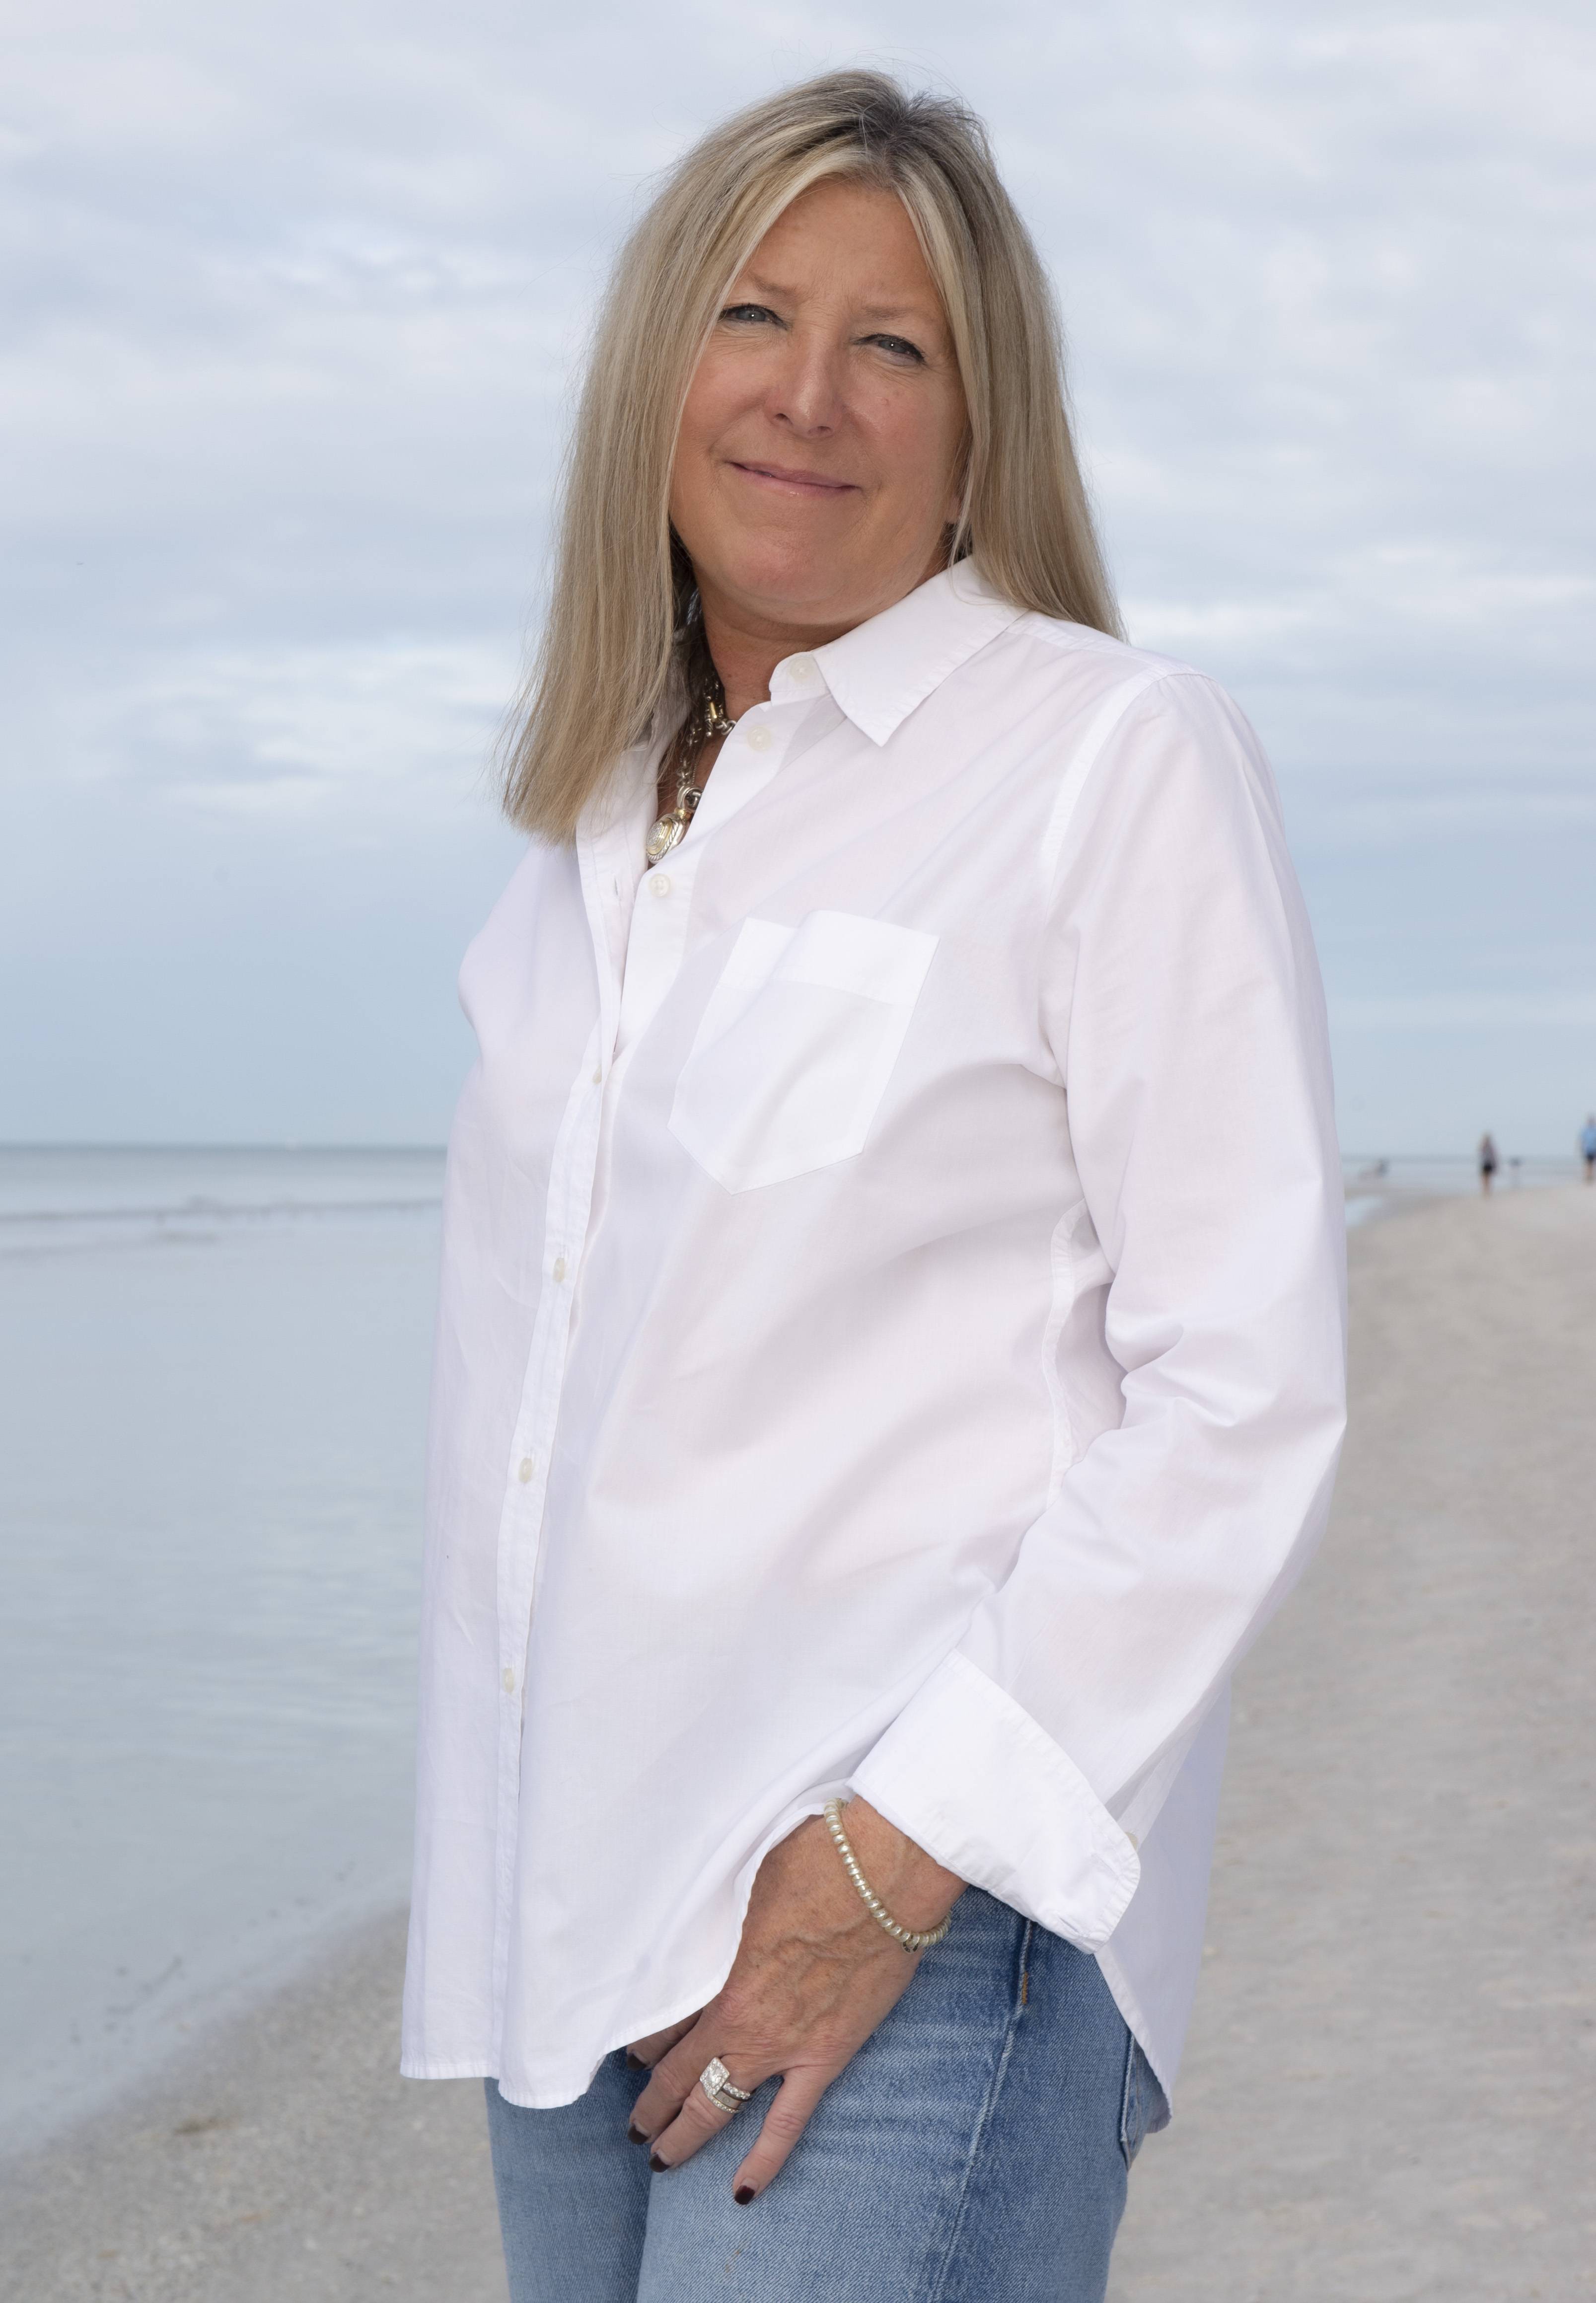 Suzy Korinek on the beach